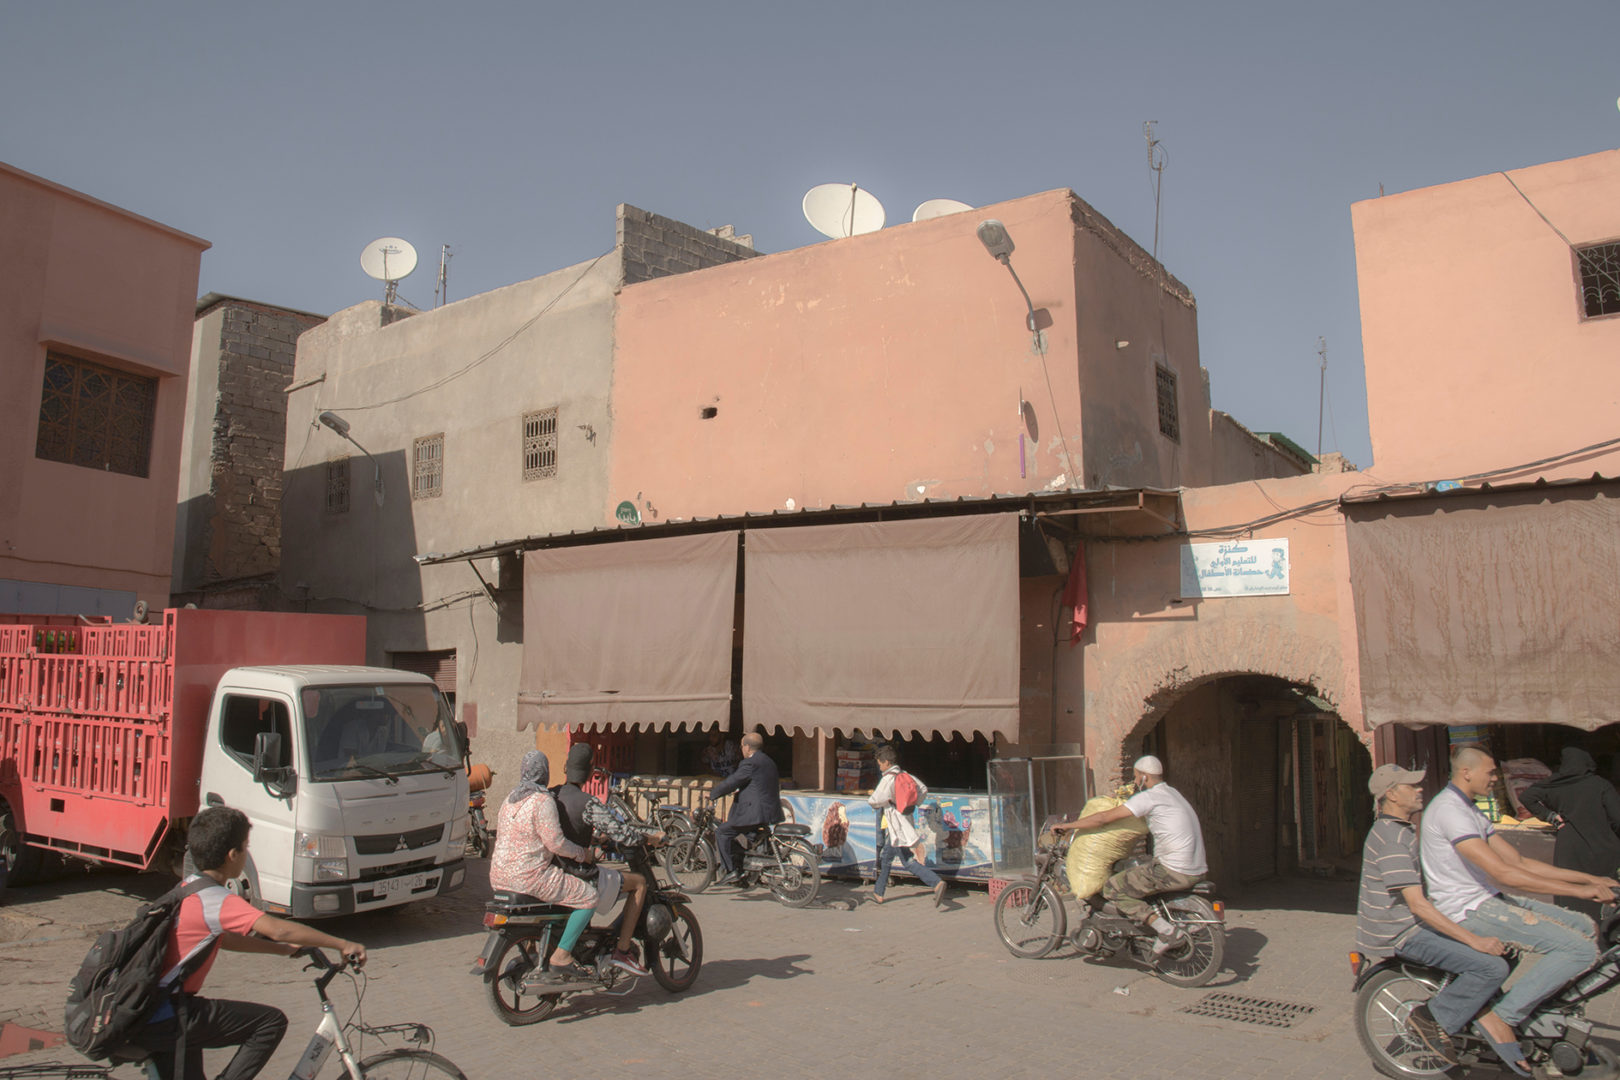 A corner in Marrakech